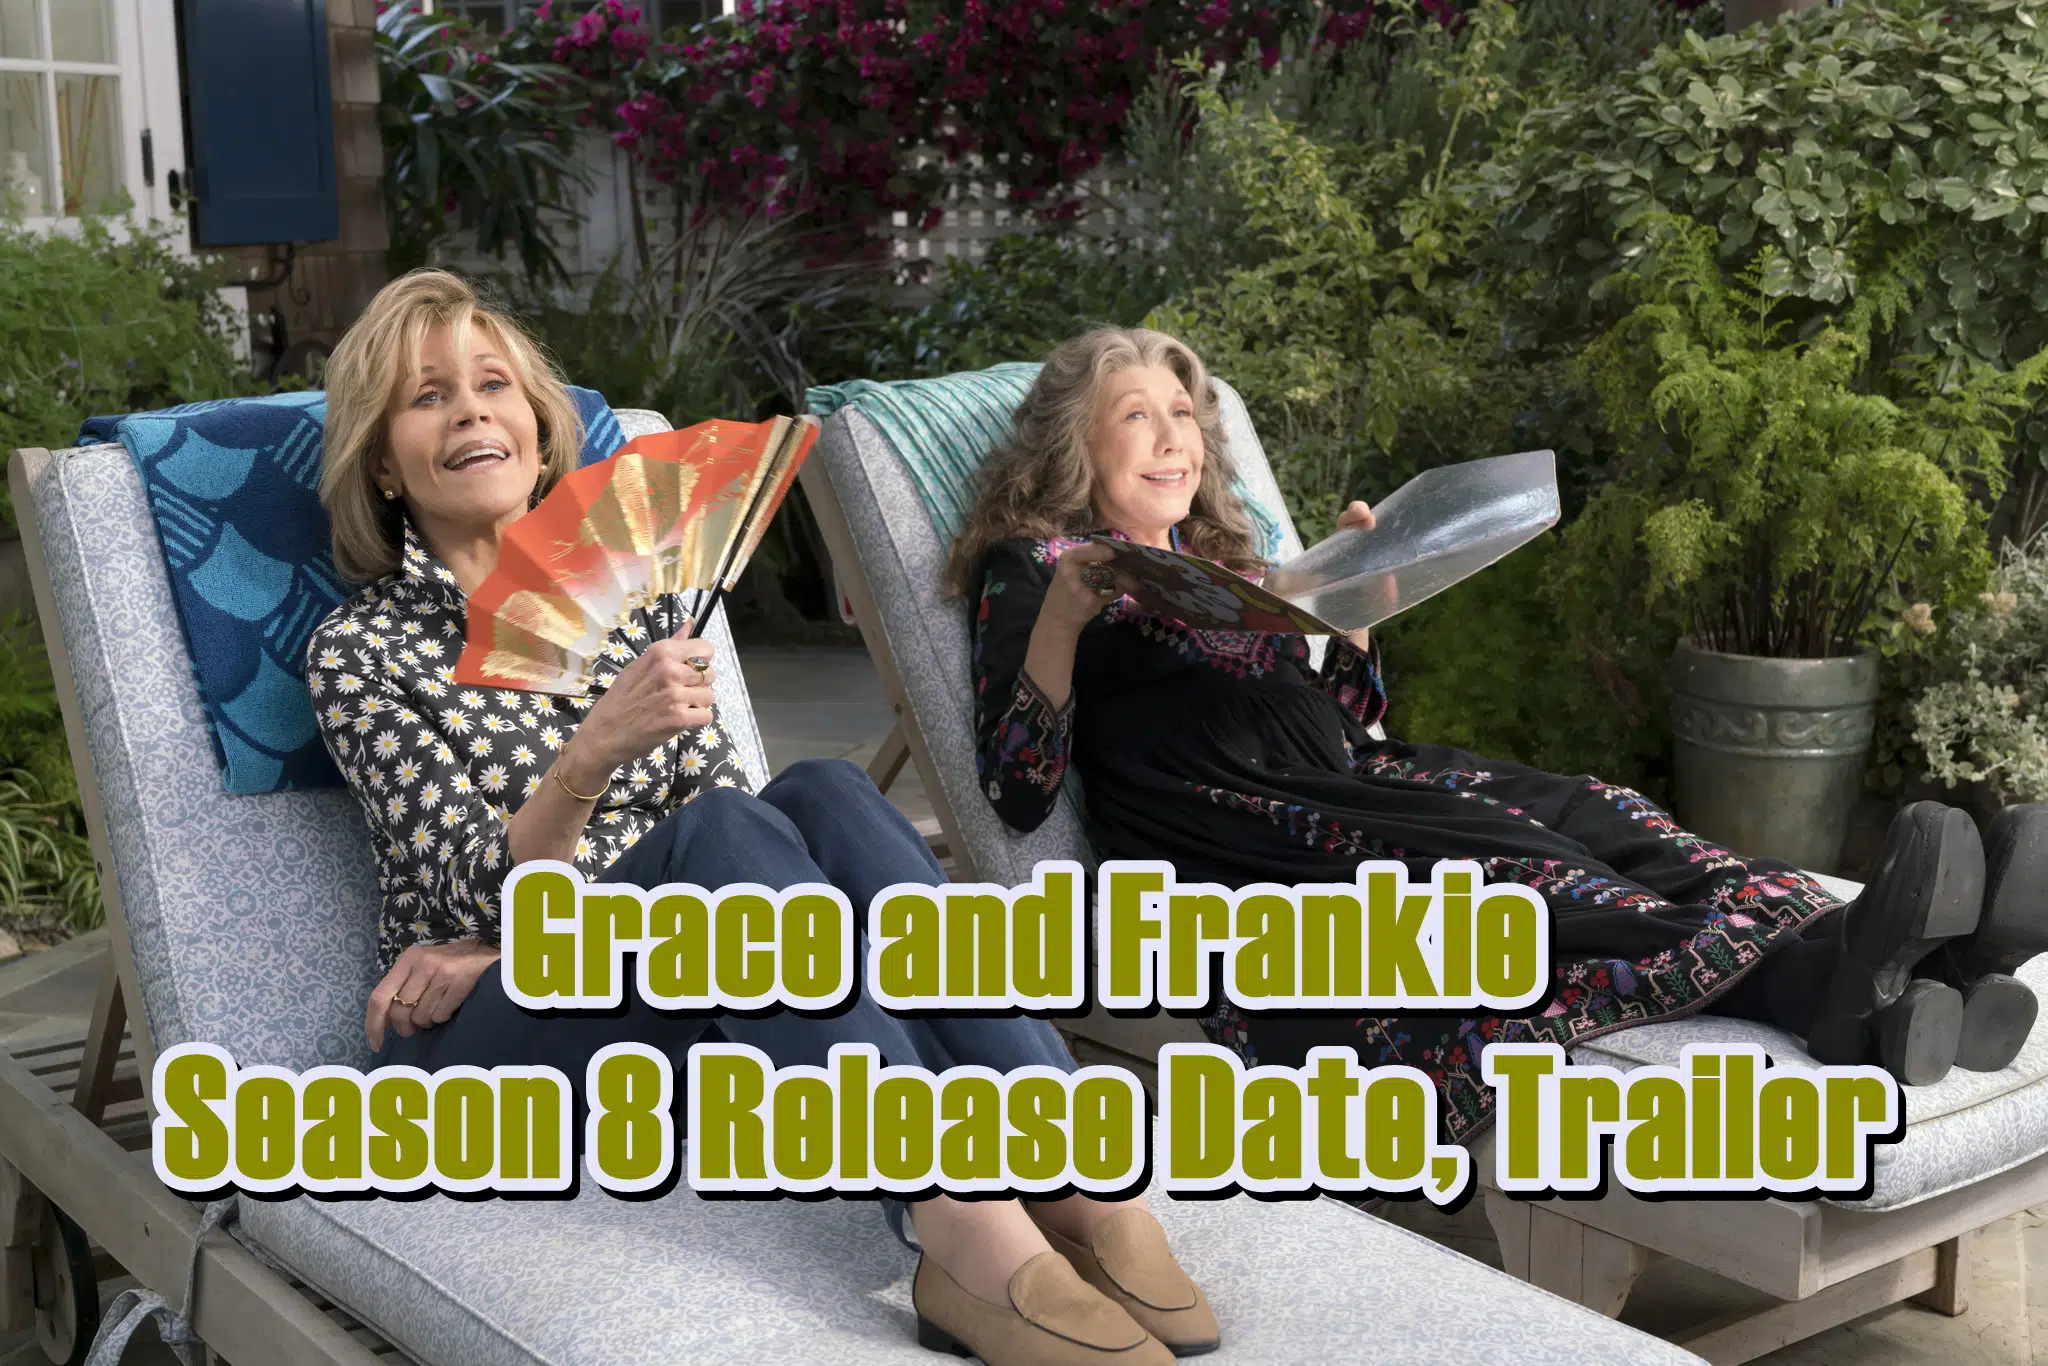 Grace and Frankie Season 8 Release Date, Trailer